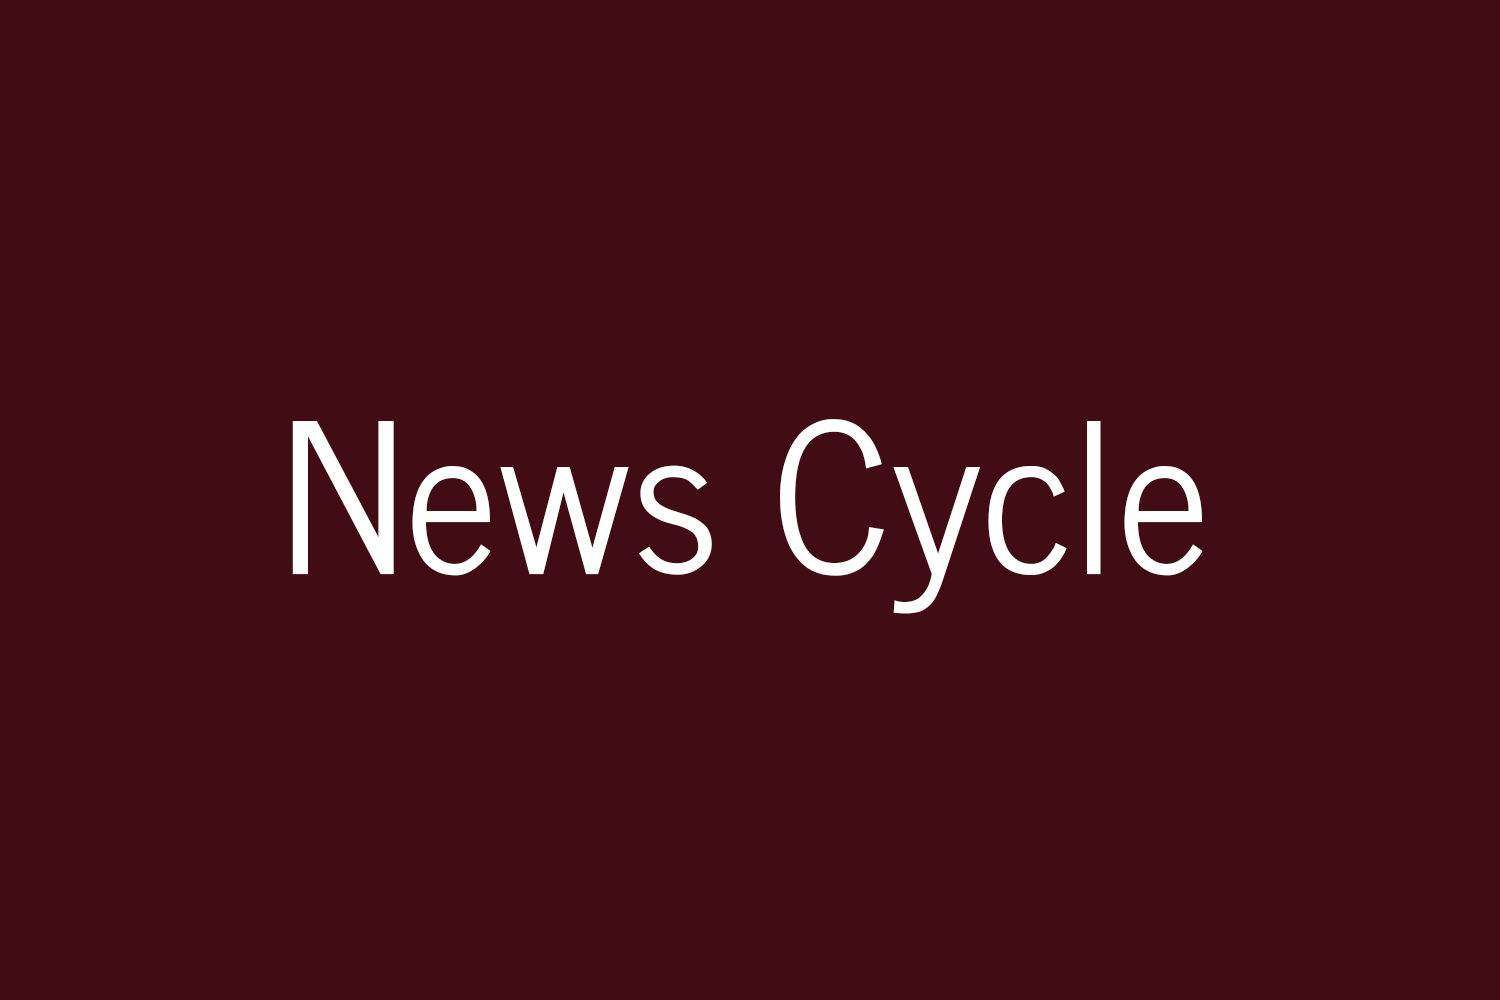 News Cycle